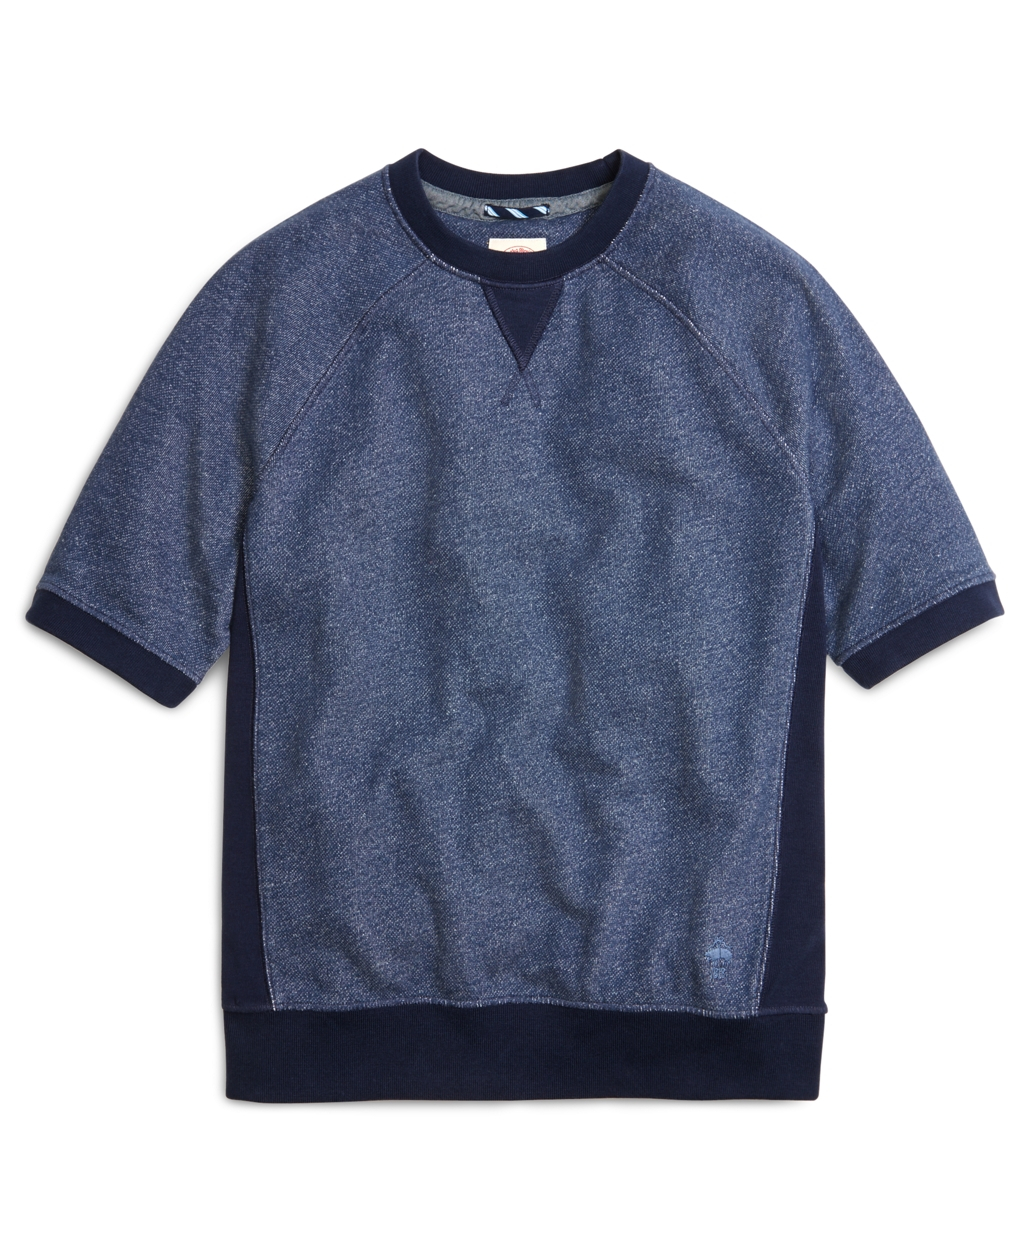 Lyst - Brooks Brothers Raglan Short-Sleeve Sweatshirt in Blue for Men